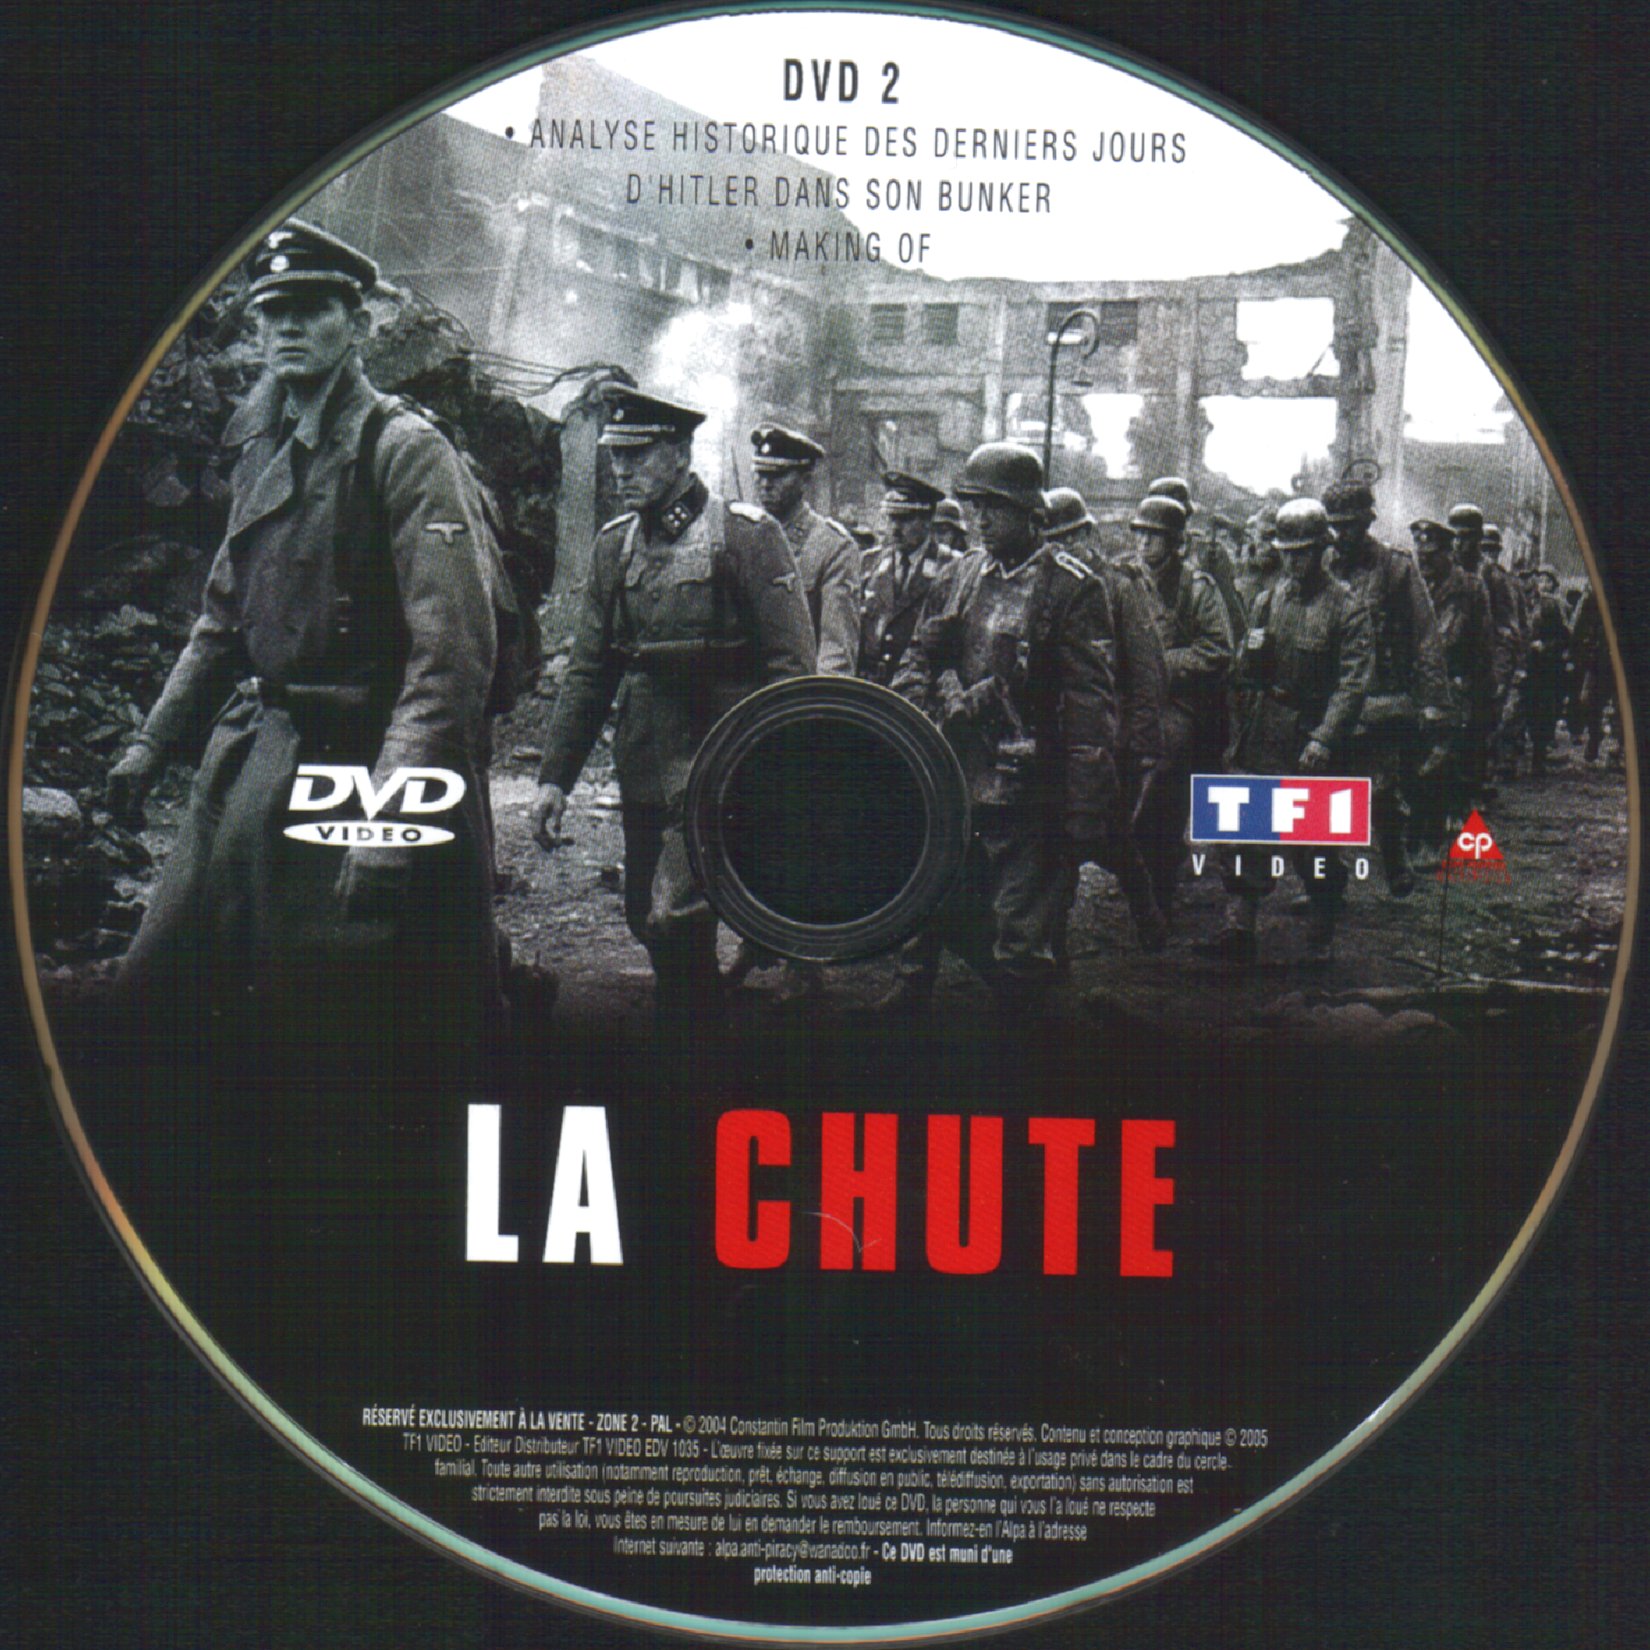 La chute (DVD 2)